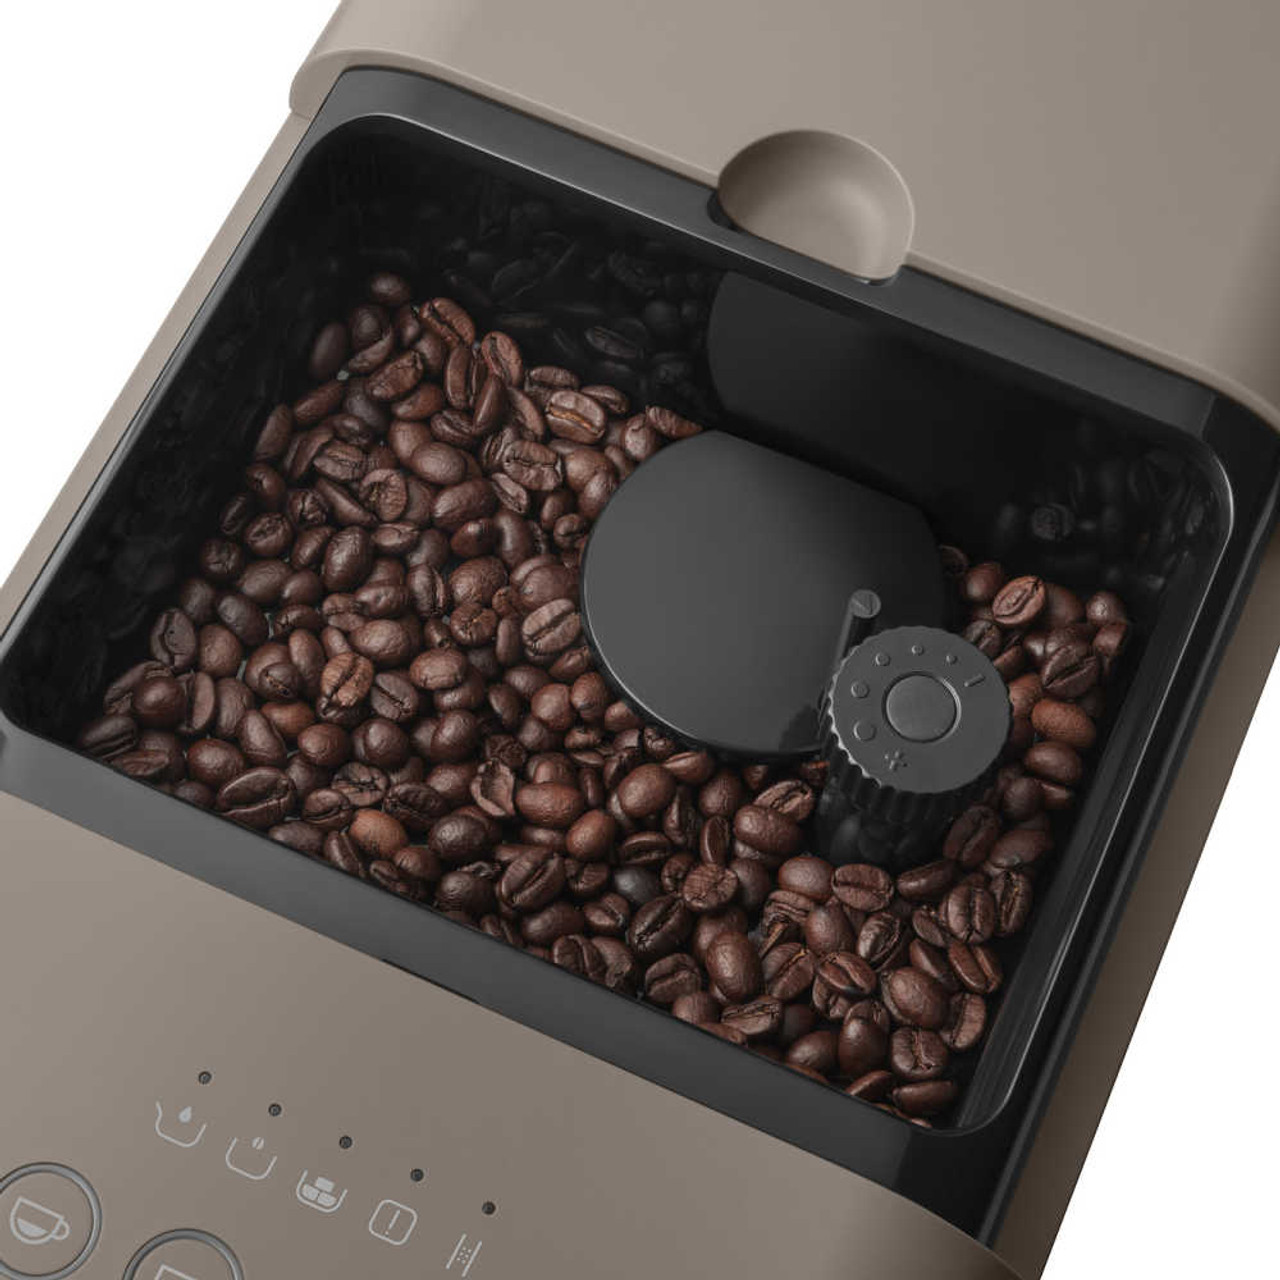 SMEG Espresso Coffee Machine with Steamer